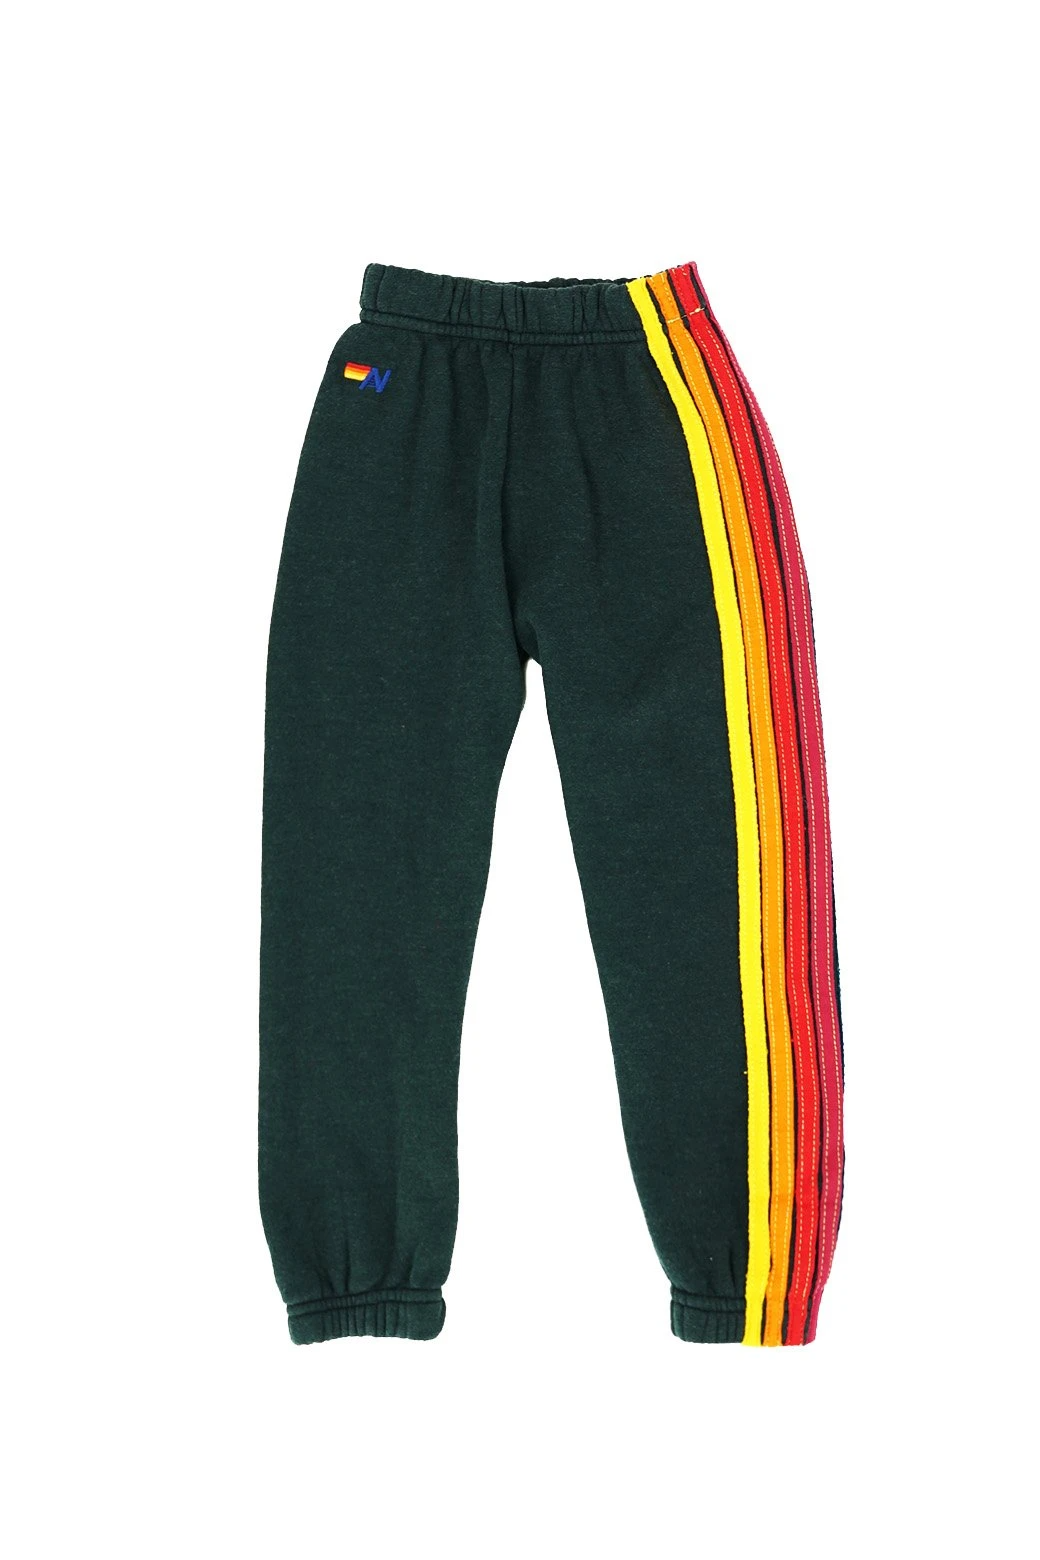 Aviator Nation Kid's 5 Stripe Sweatpants -Charcoal